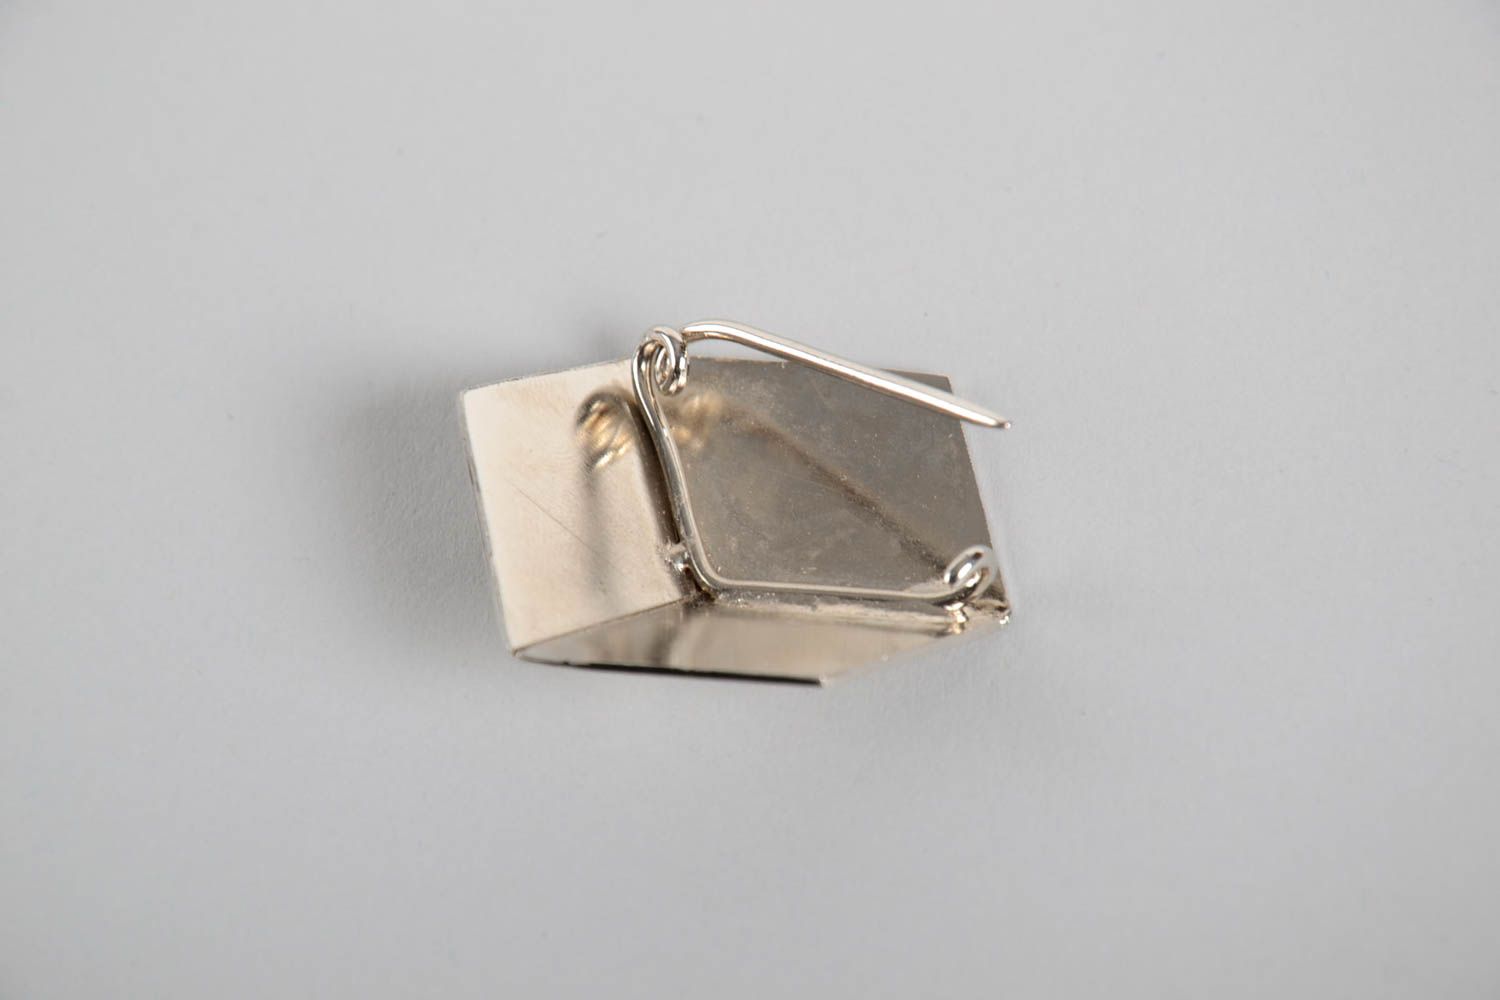 Handmade brooch designer accessory for women unusual jewelry gift ideas photo 4